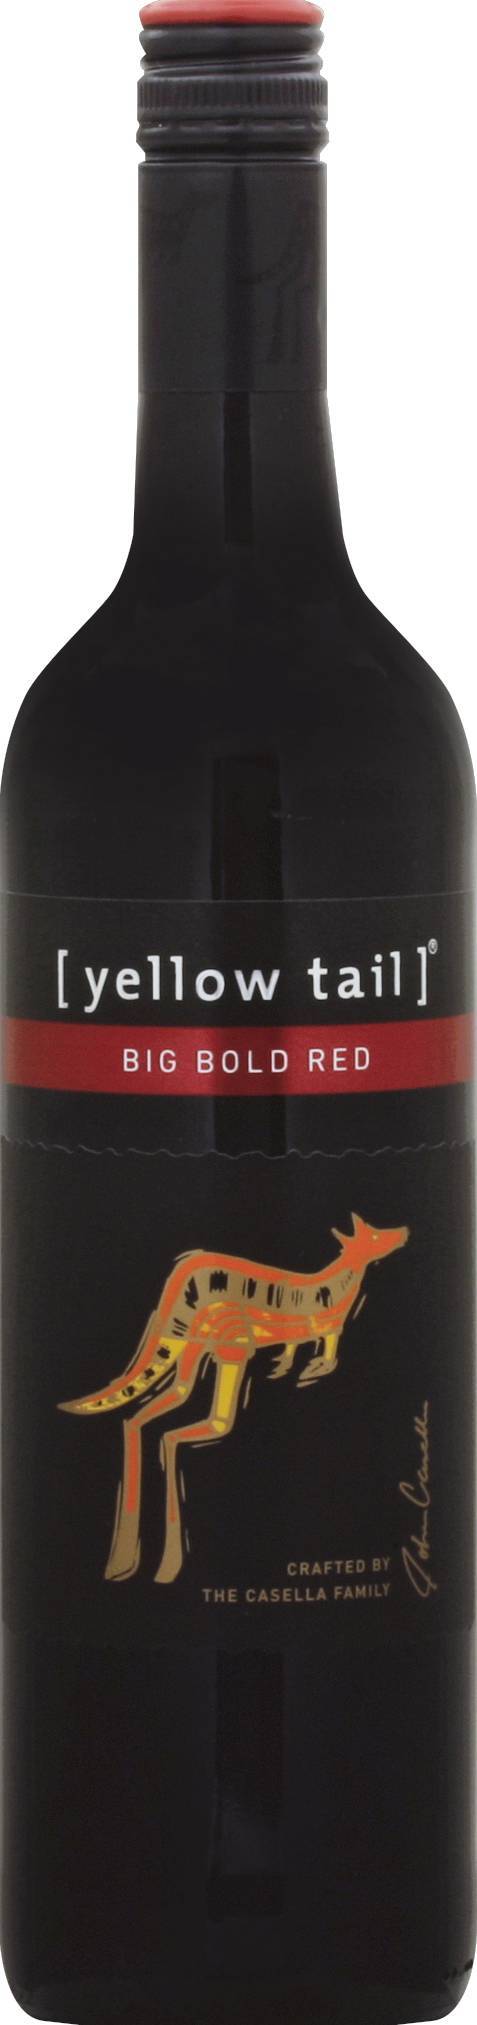 Yellow Tail Big Bold Red Wine (750 ml)